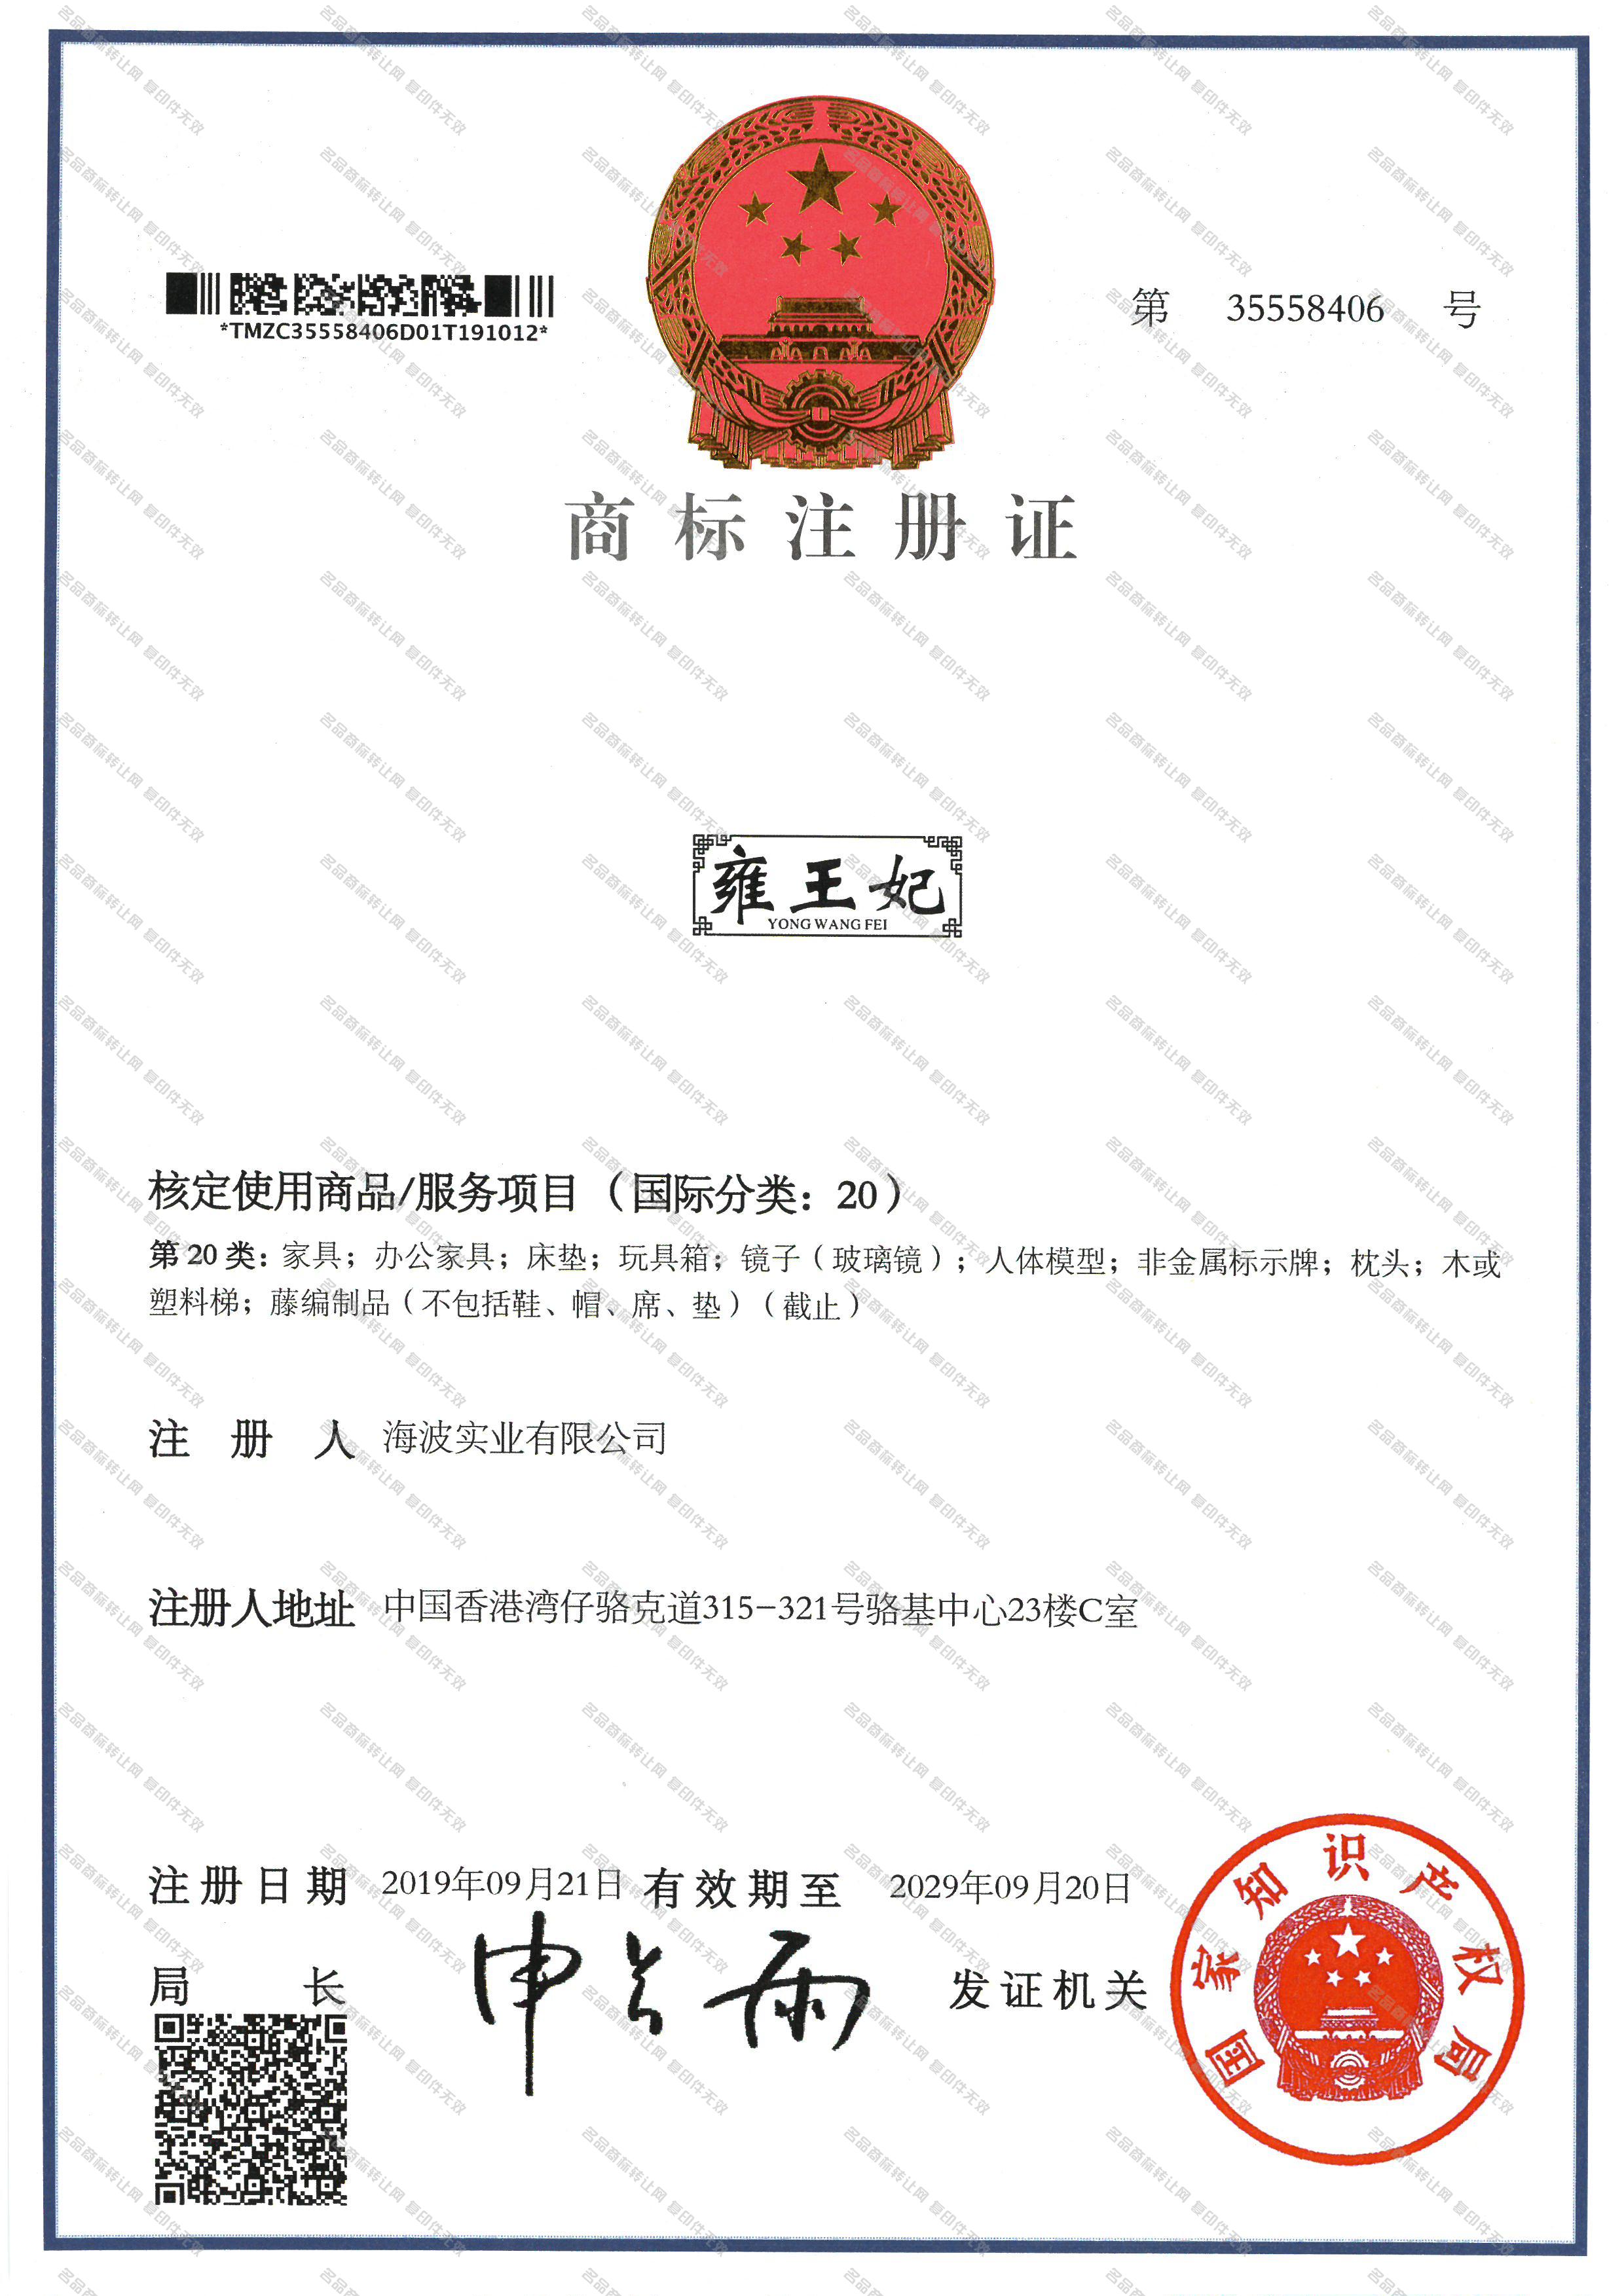 雍王妃 YONGWANGFEI注册证